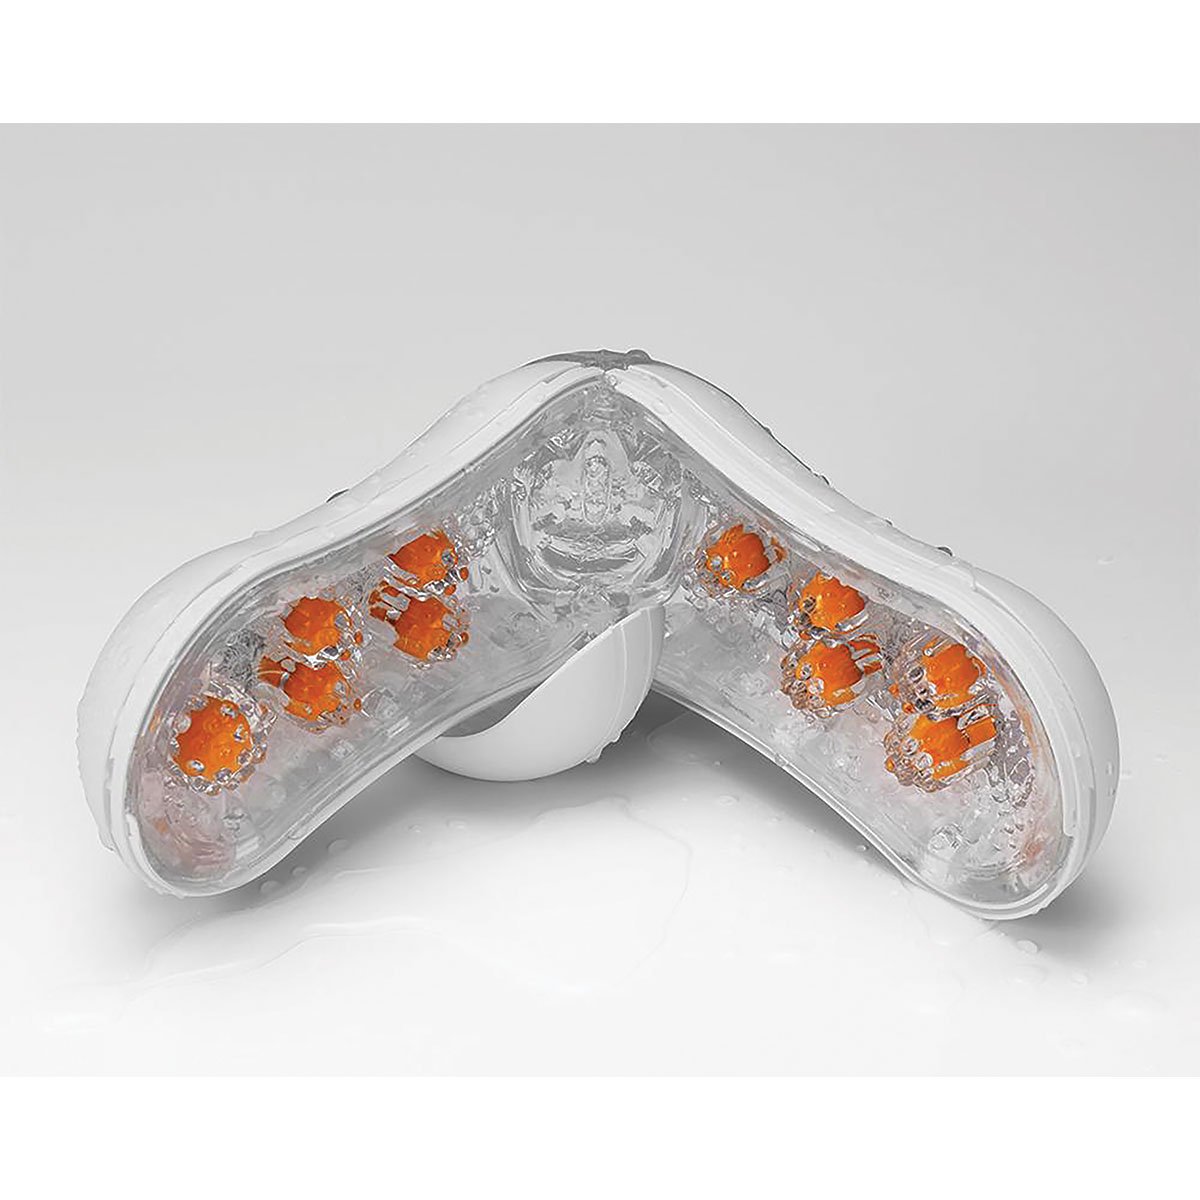 Tenga Flip Orb Orange Crash - Buy At Luxury Toy X - Free 3-Day Shipping